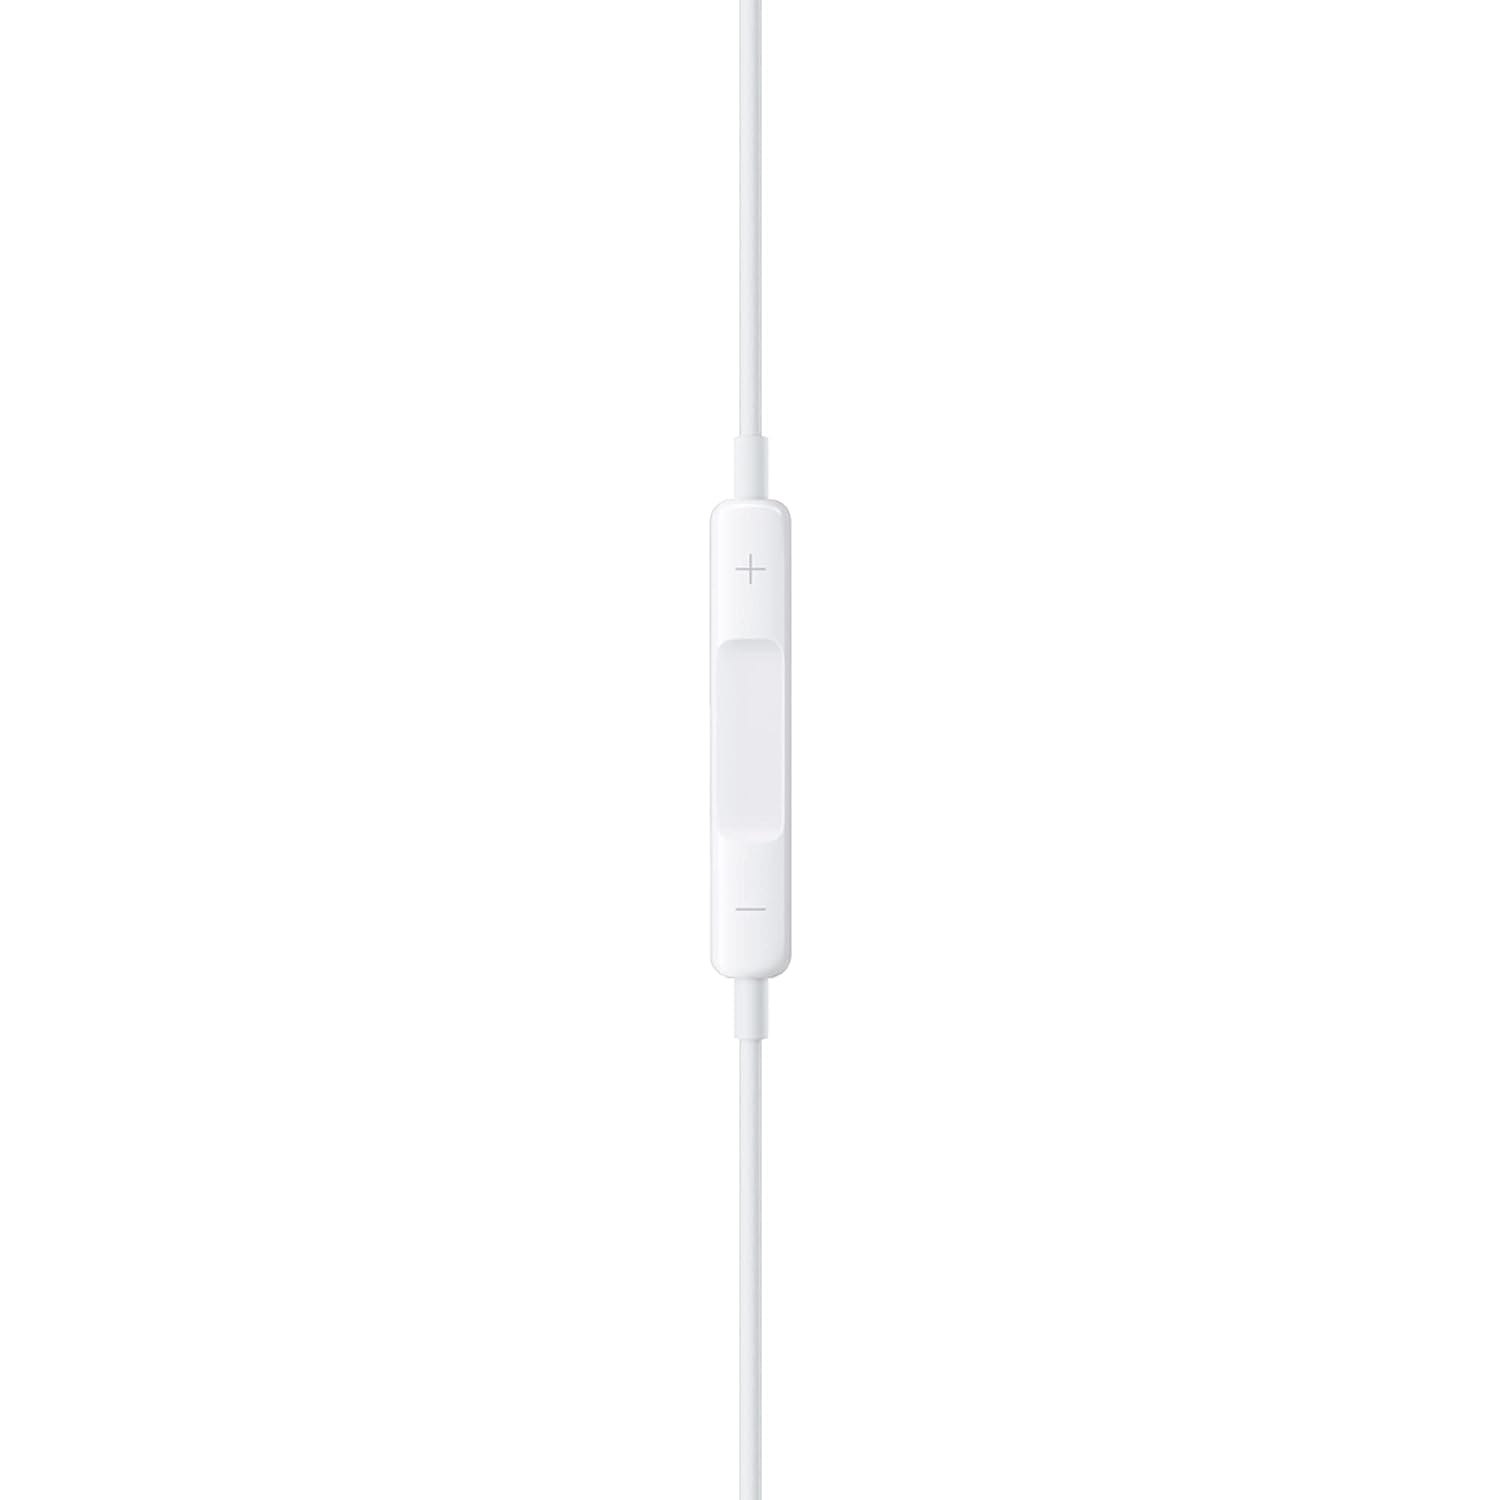 Apple EarPods with Lightning Connector Earphone